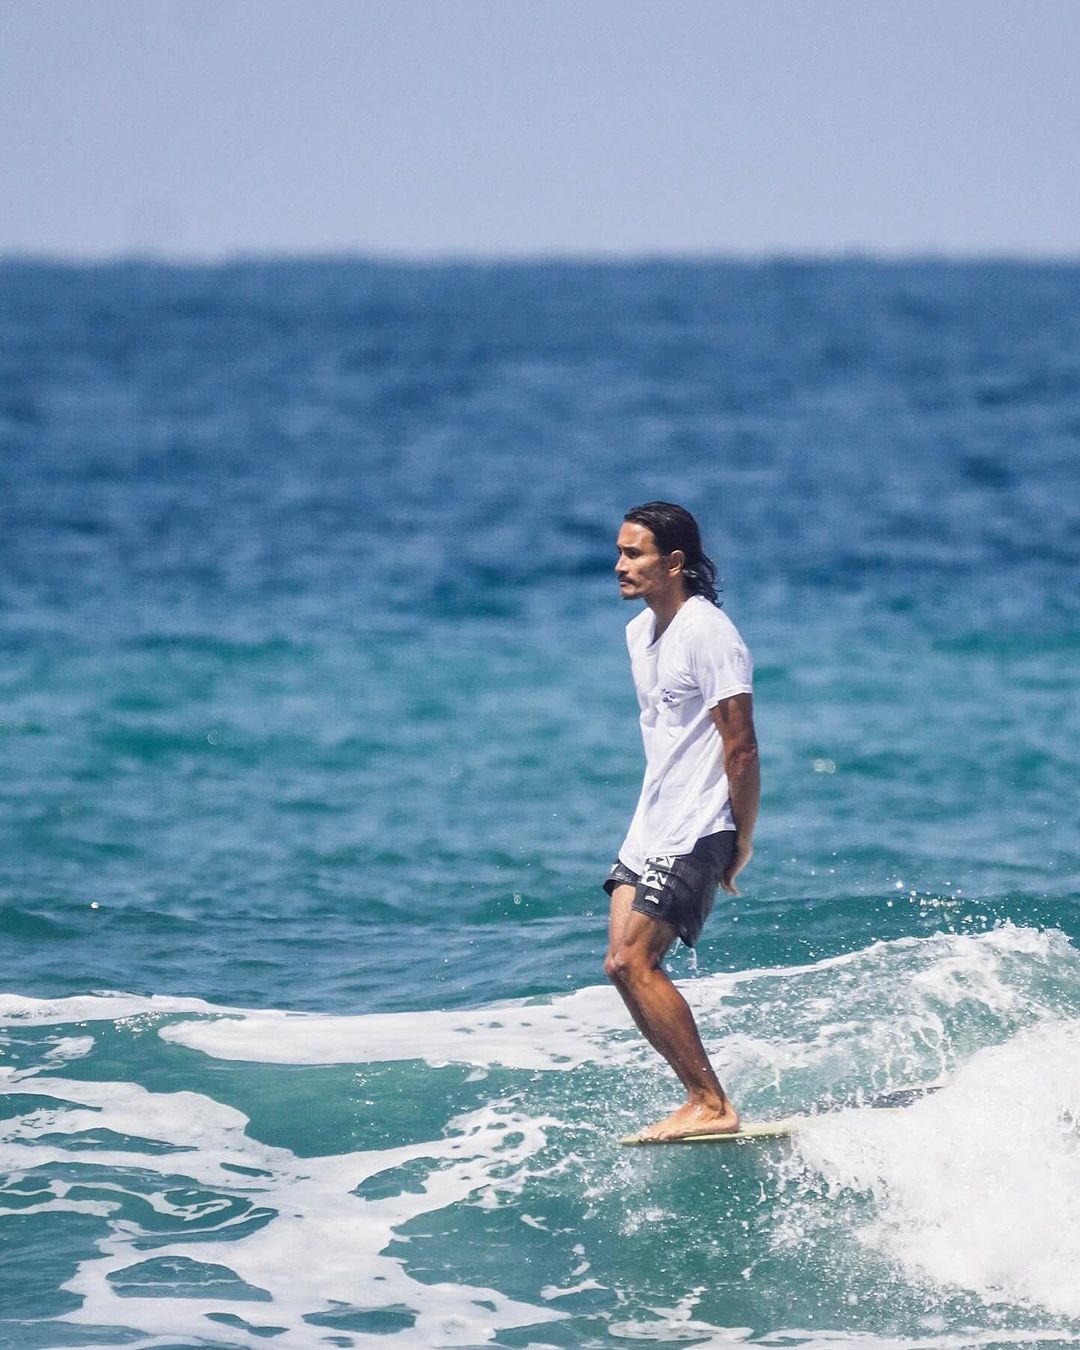 Luke Landrigan surfing in San Juan, La Union